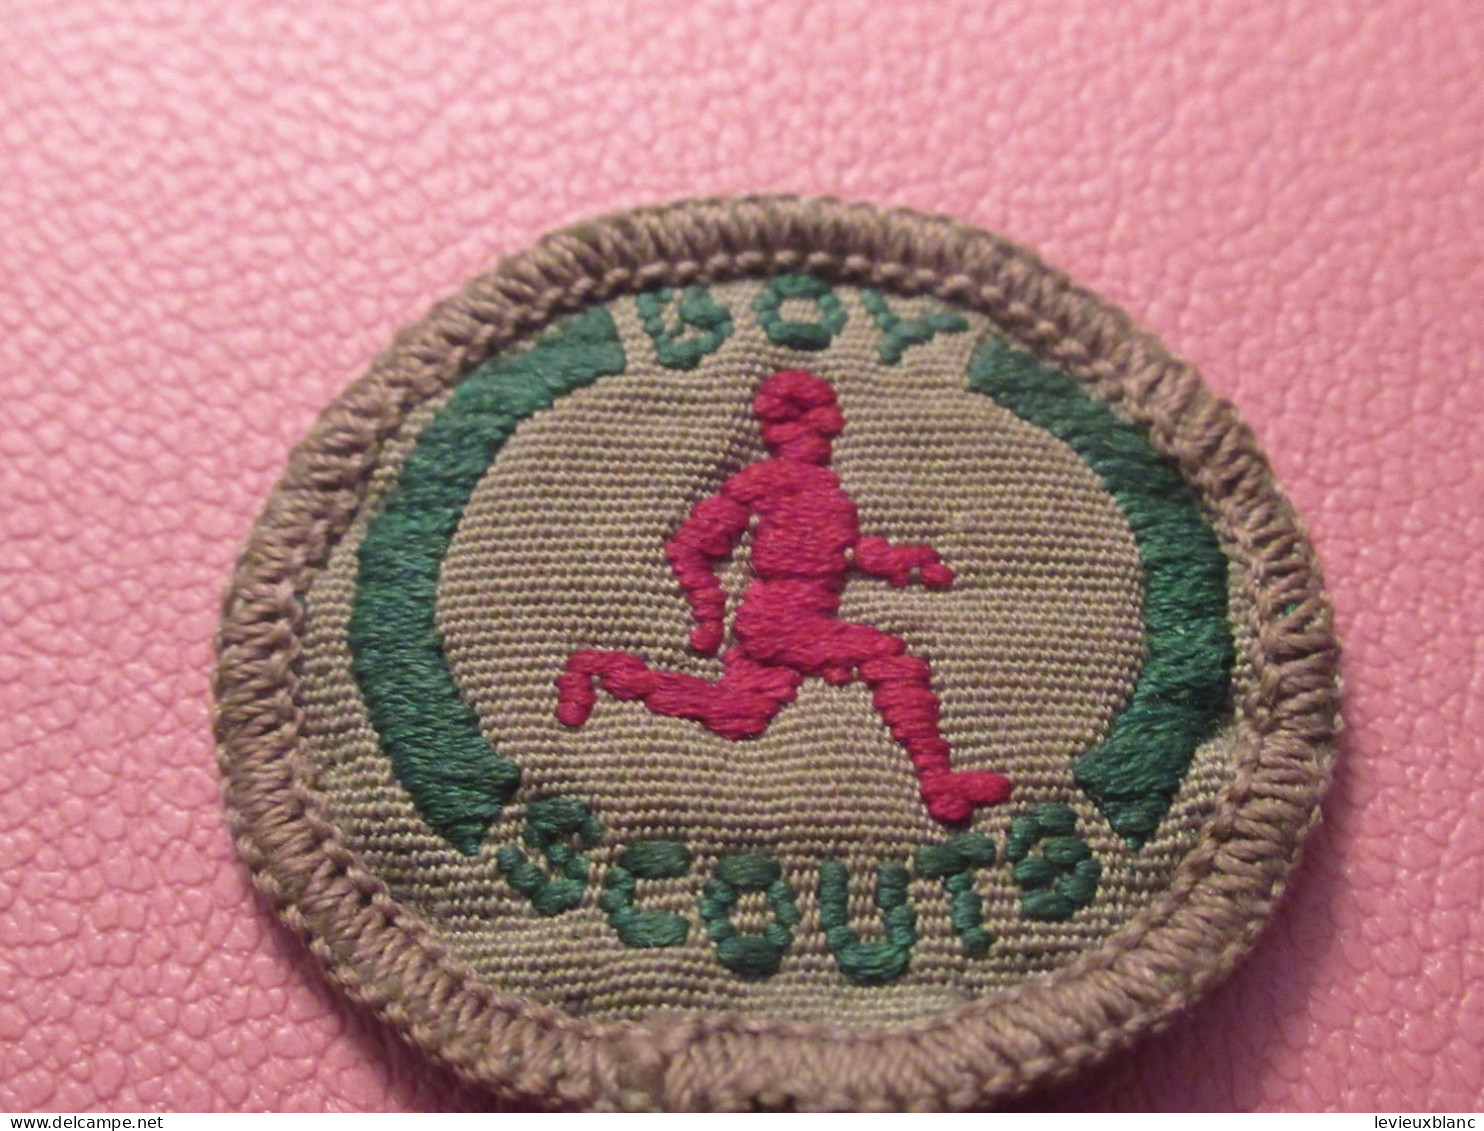 Scoutisme Canada/ Ecusson  Tissu/ Insigne De Mérite/Course à Pied /année 1940-1960                  ET597 - Pfadfinder-Bewegung